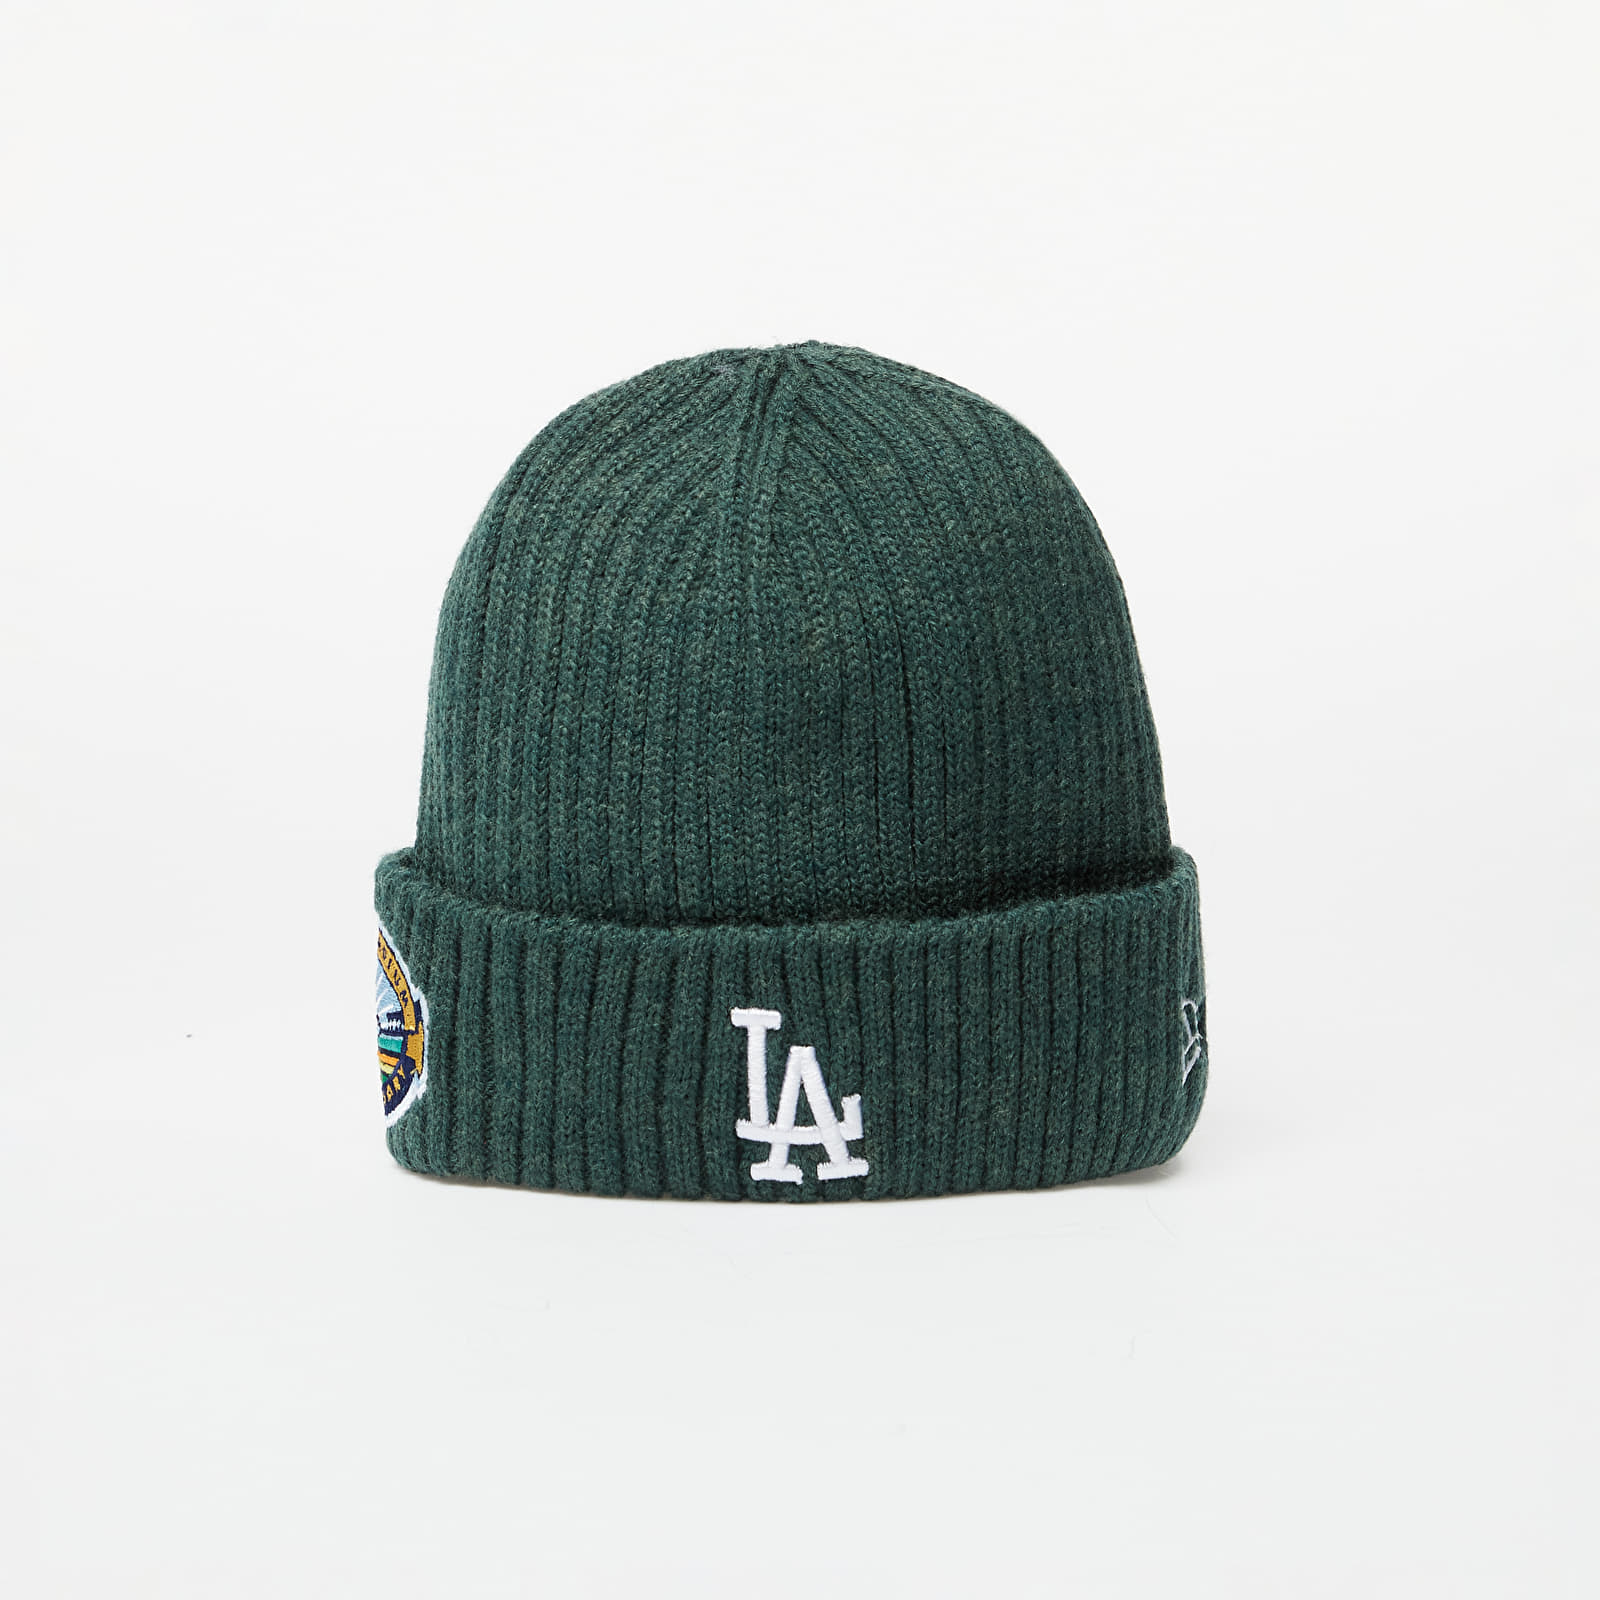 Hats New Era MLB New Traditions Beanie Los Angeles Dodgers Dark Green/ White